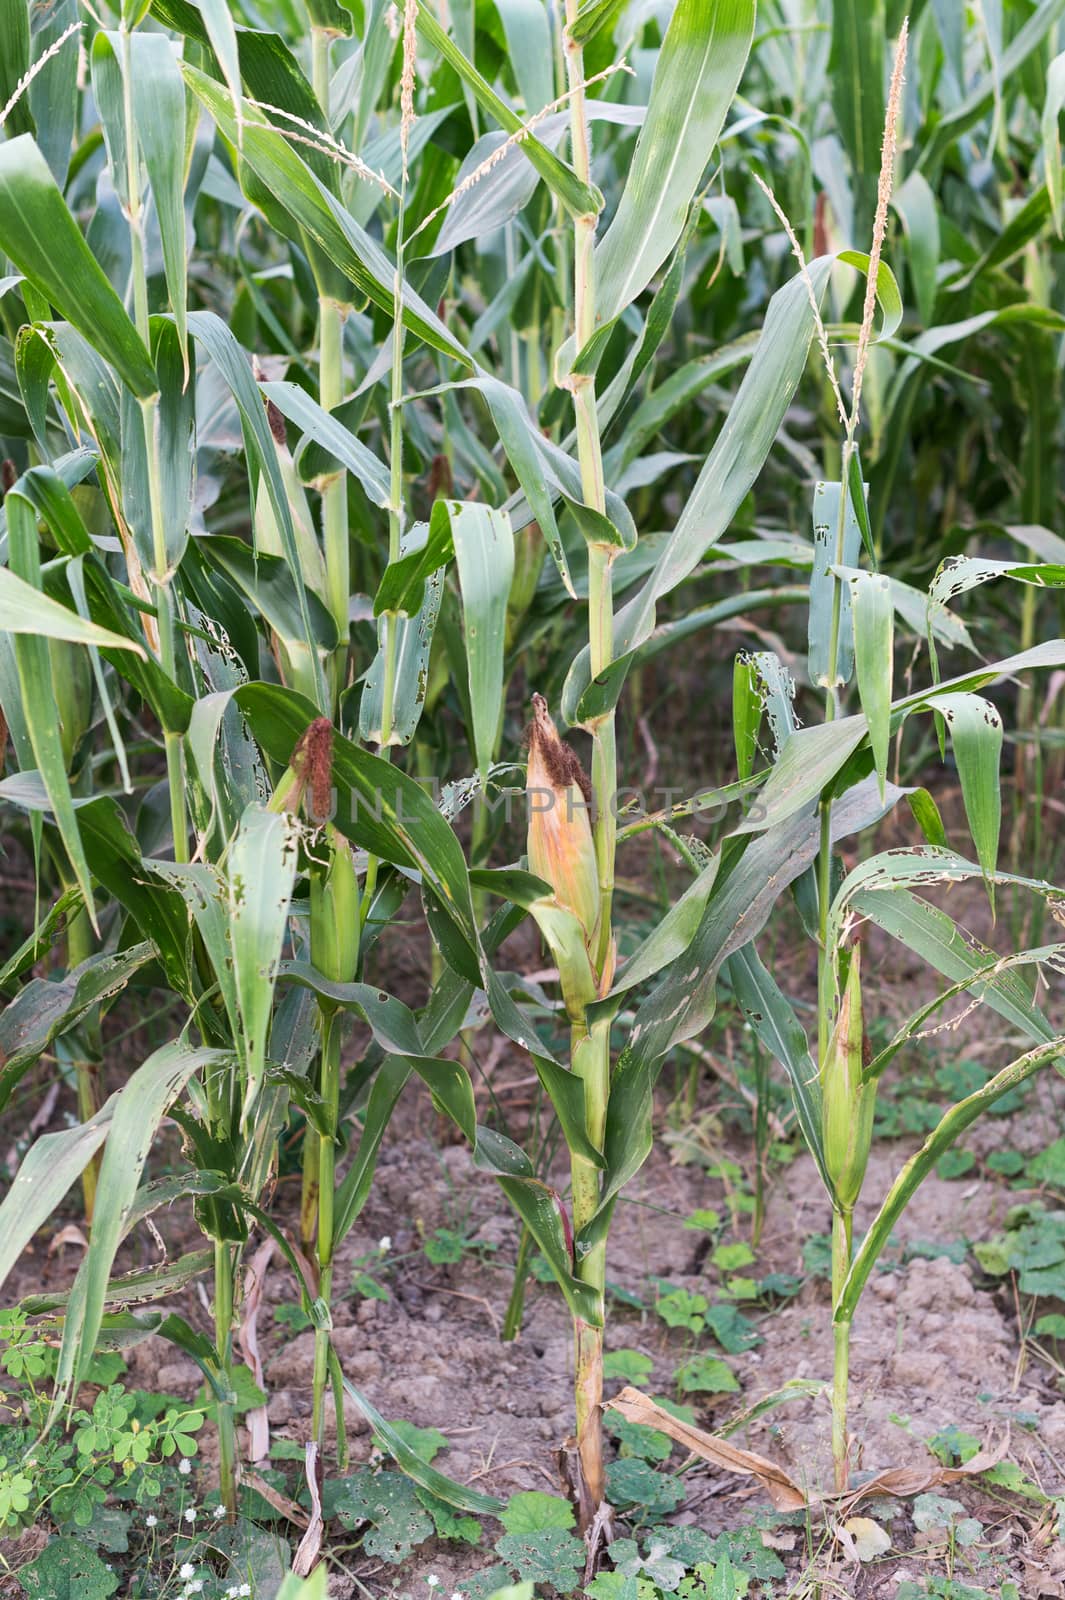 Farm of corn plant closeup